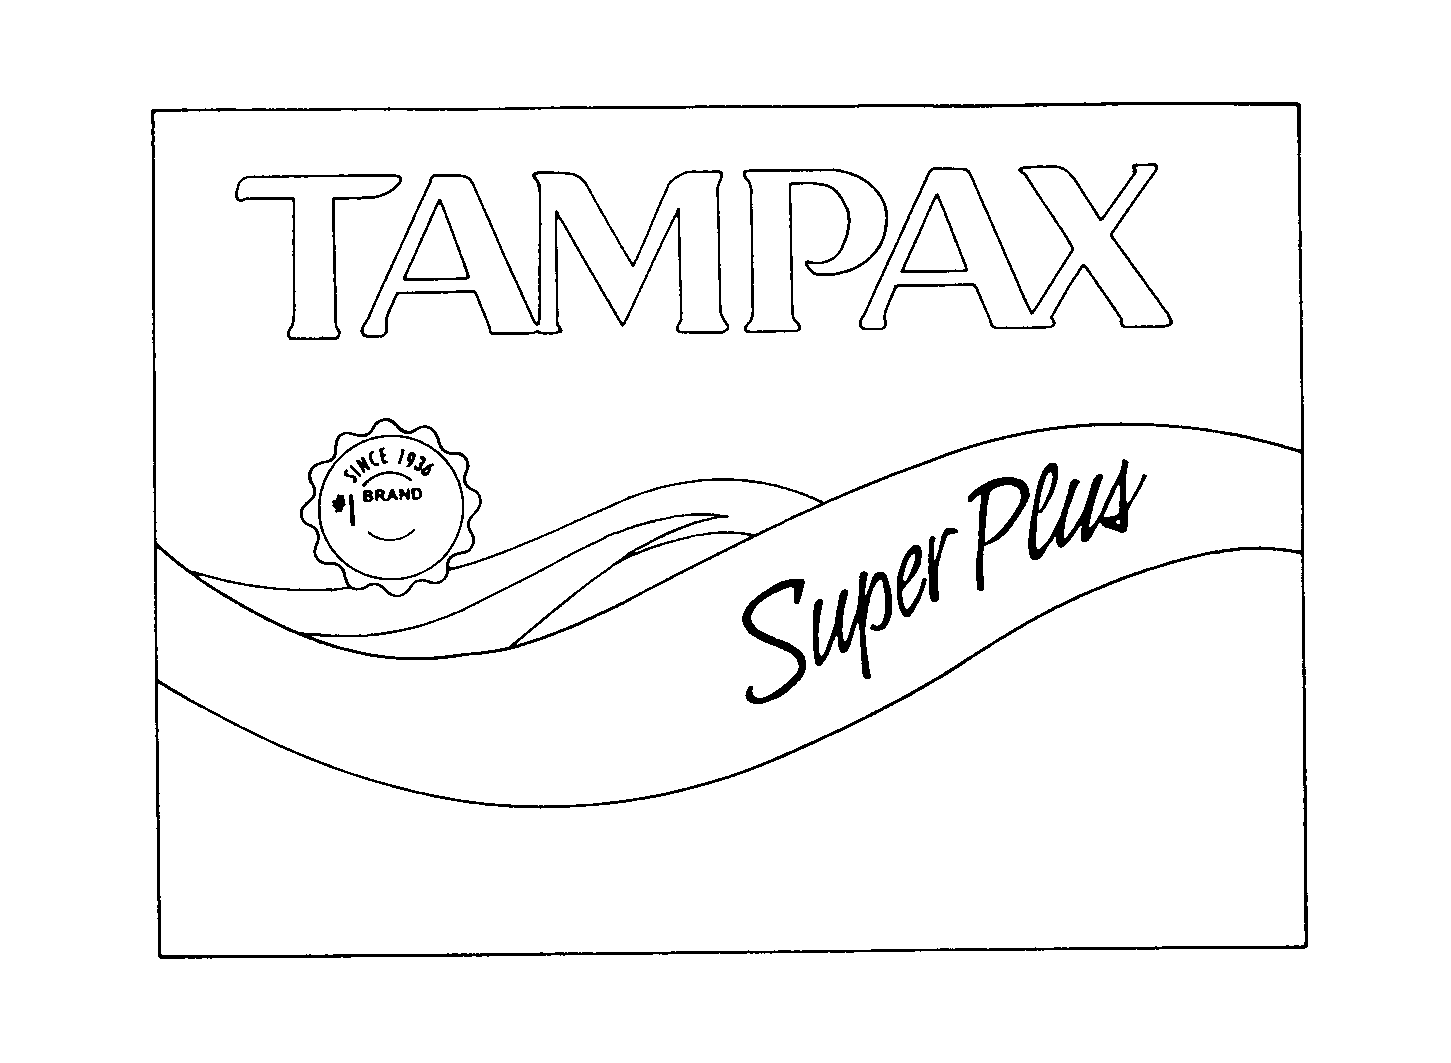  TAMPAX SUPER PLUS #1 BRAND SINCE 1936